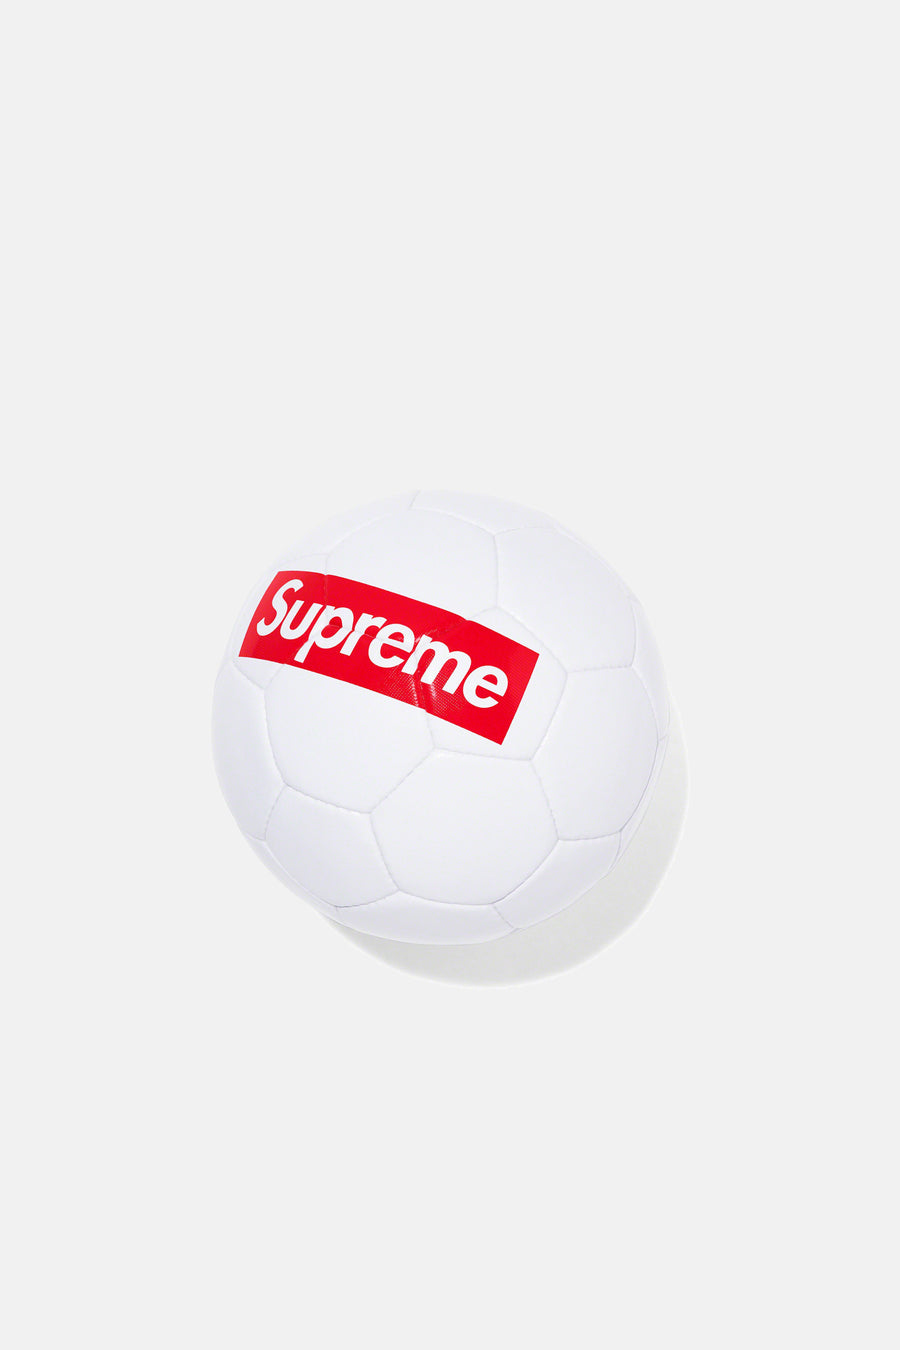 Supreme x Umbro Soccer Ball - blueandcream